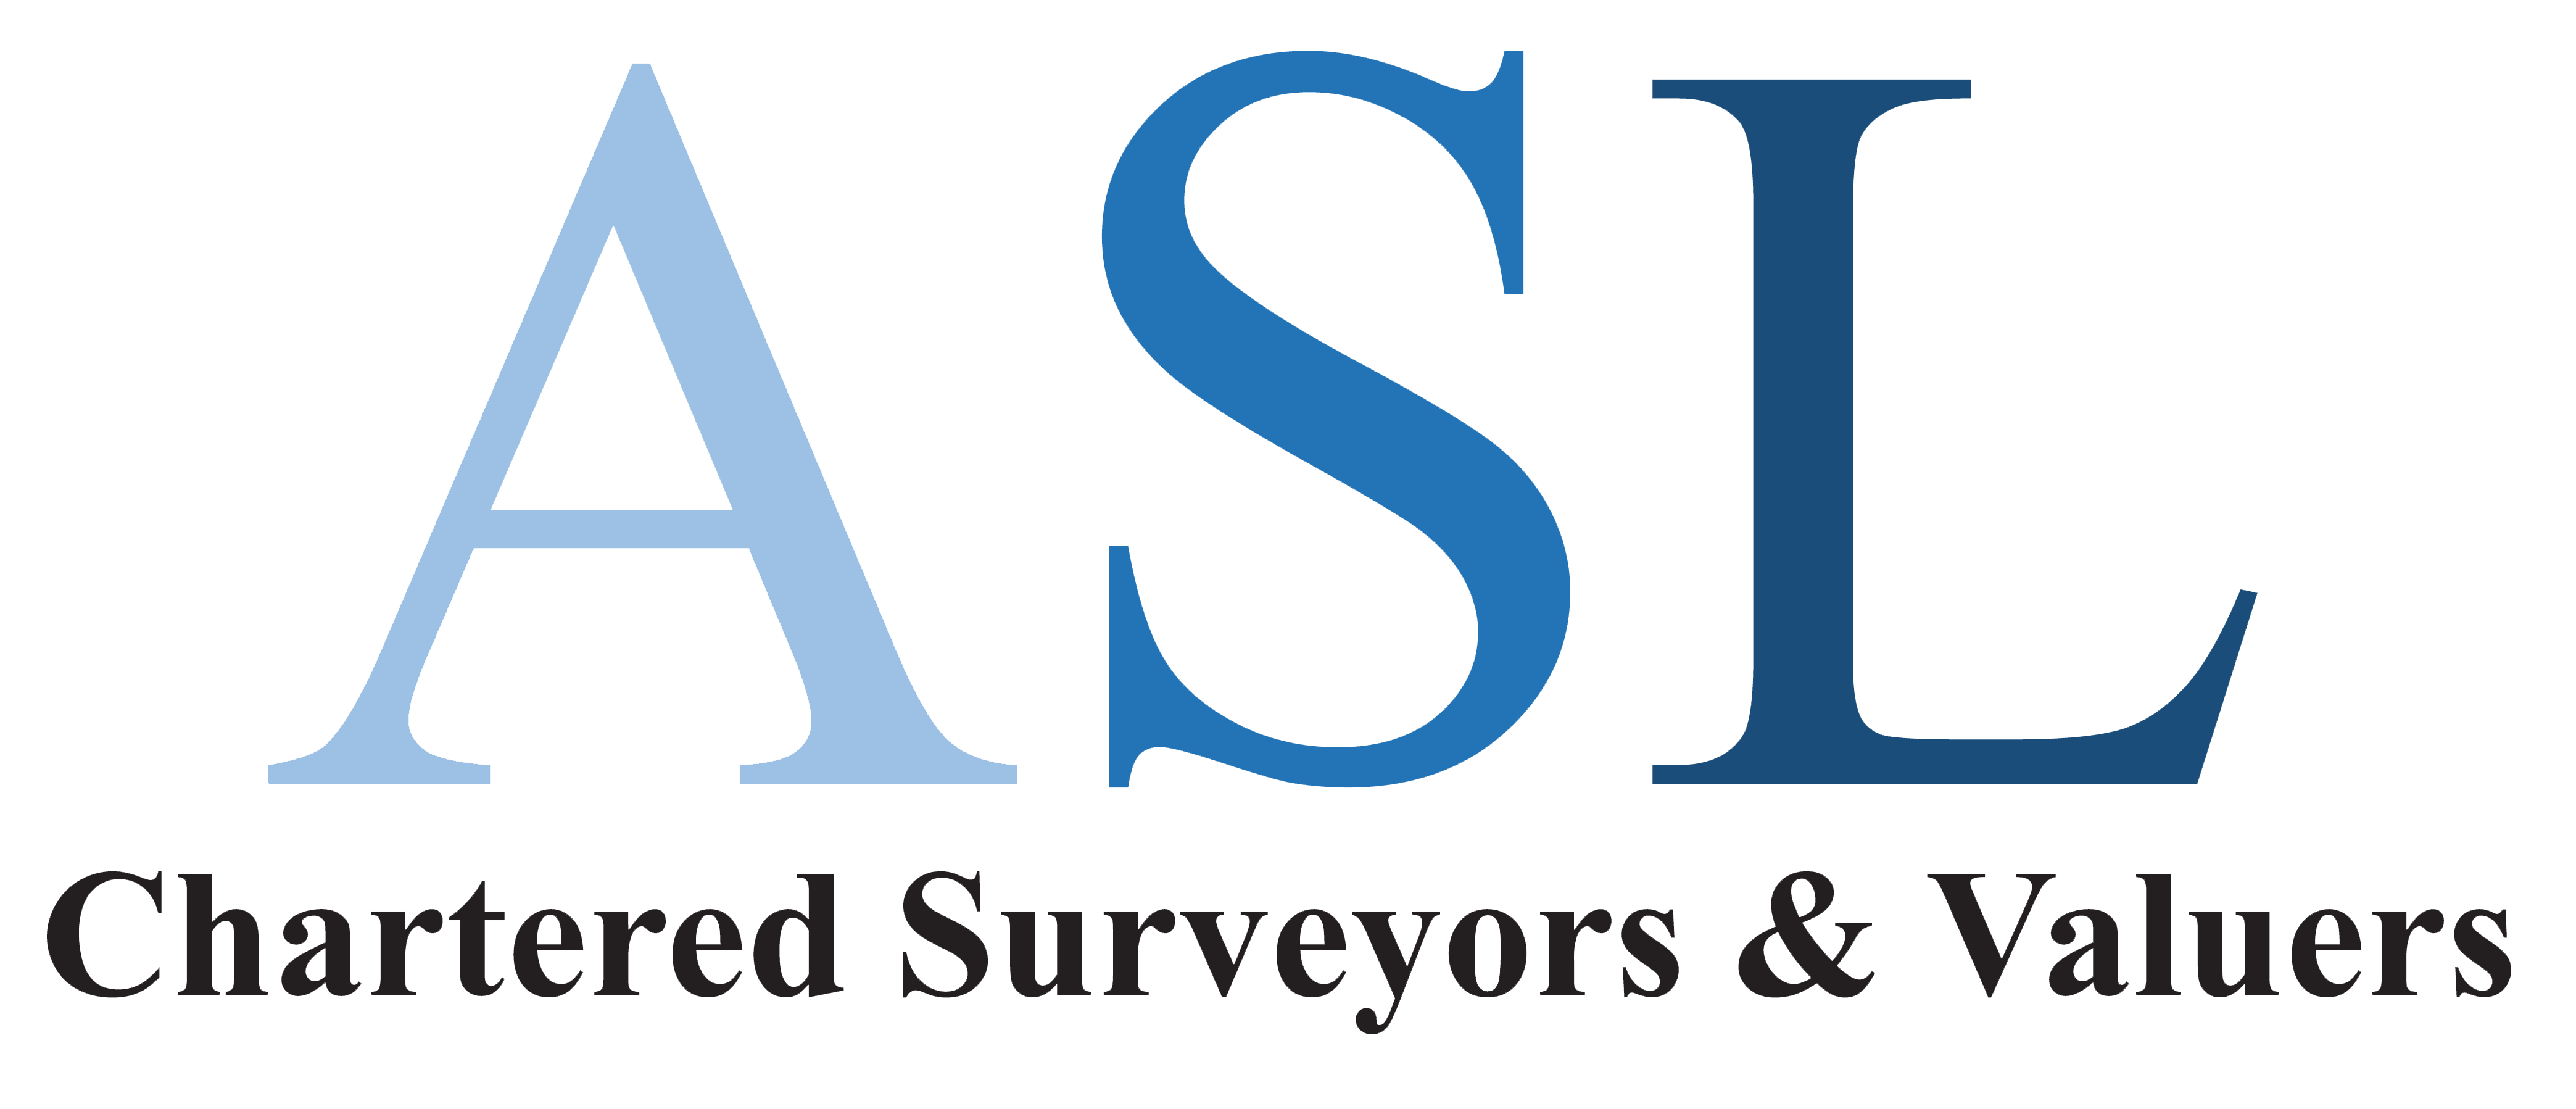 ASL,Ashall,ASL Chartered Surveyors,Chartered,Surveyors,Chartered Surveyors,Survey,Surveys,Assessment,Home Surveys,Commercial,Commercial Surveys,Home,Lease Renewals,Reviews,Retrofit,Assessments,RICS